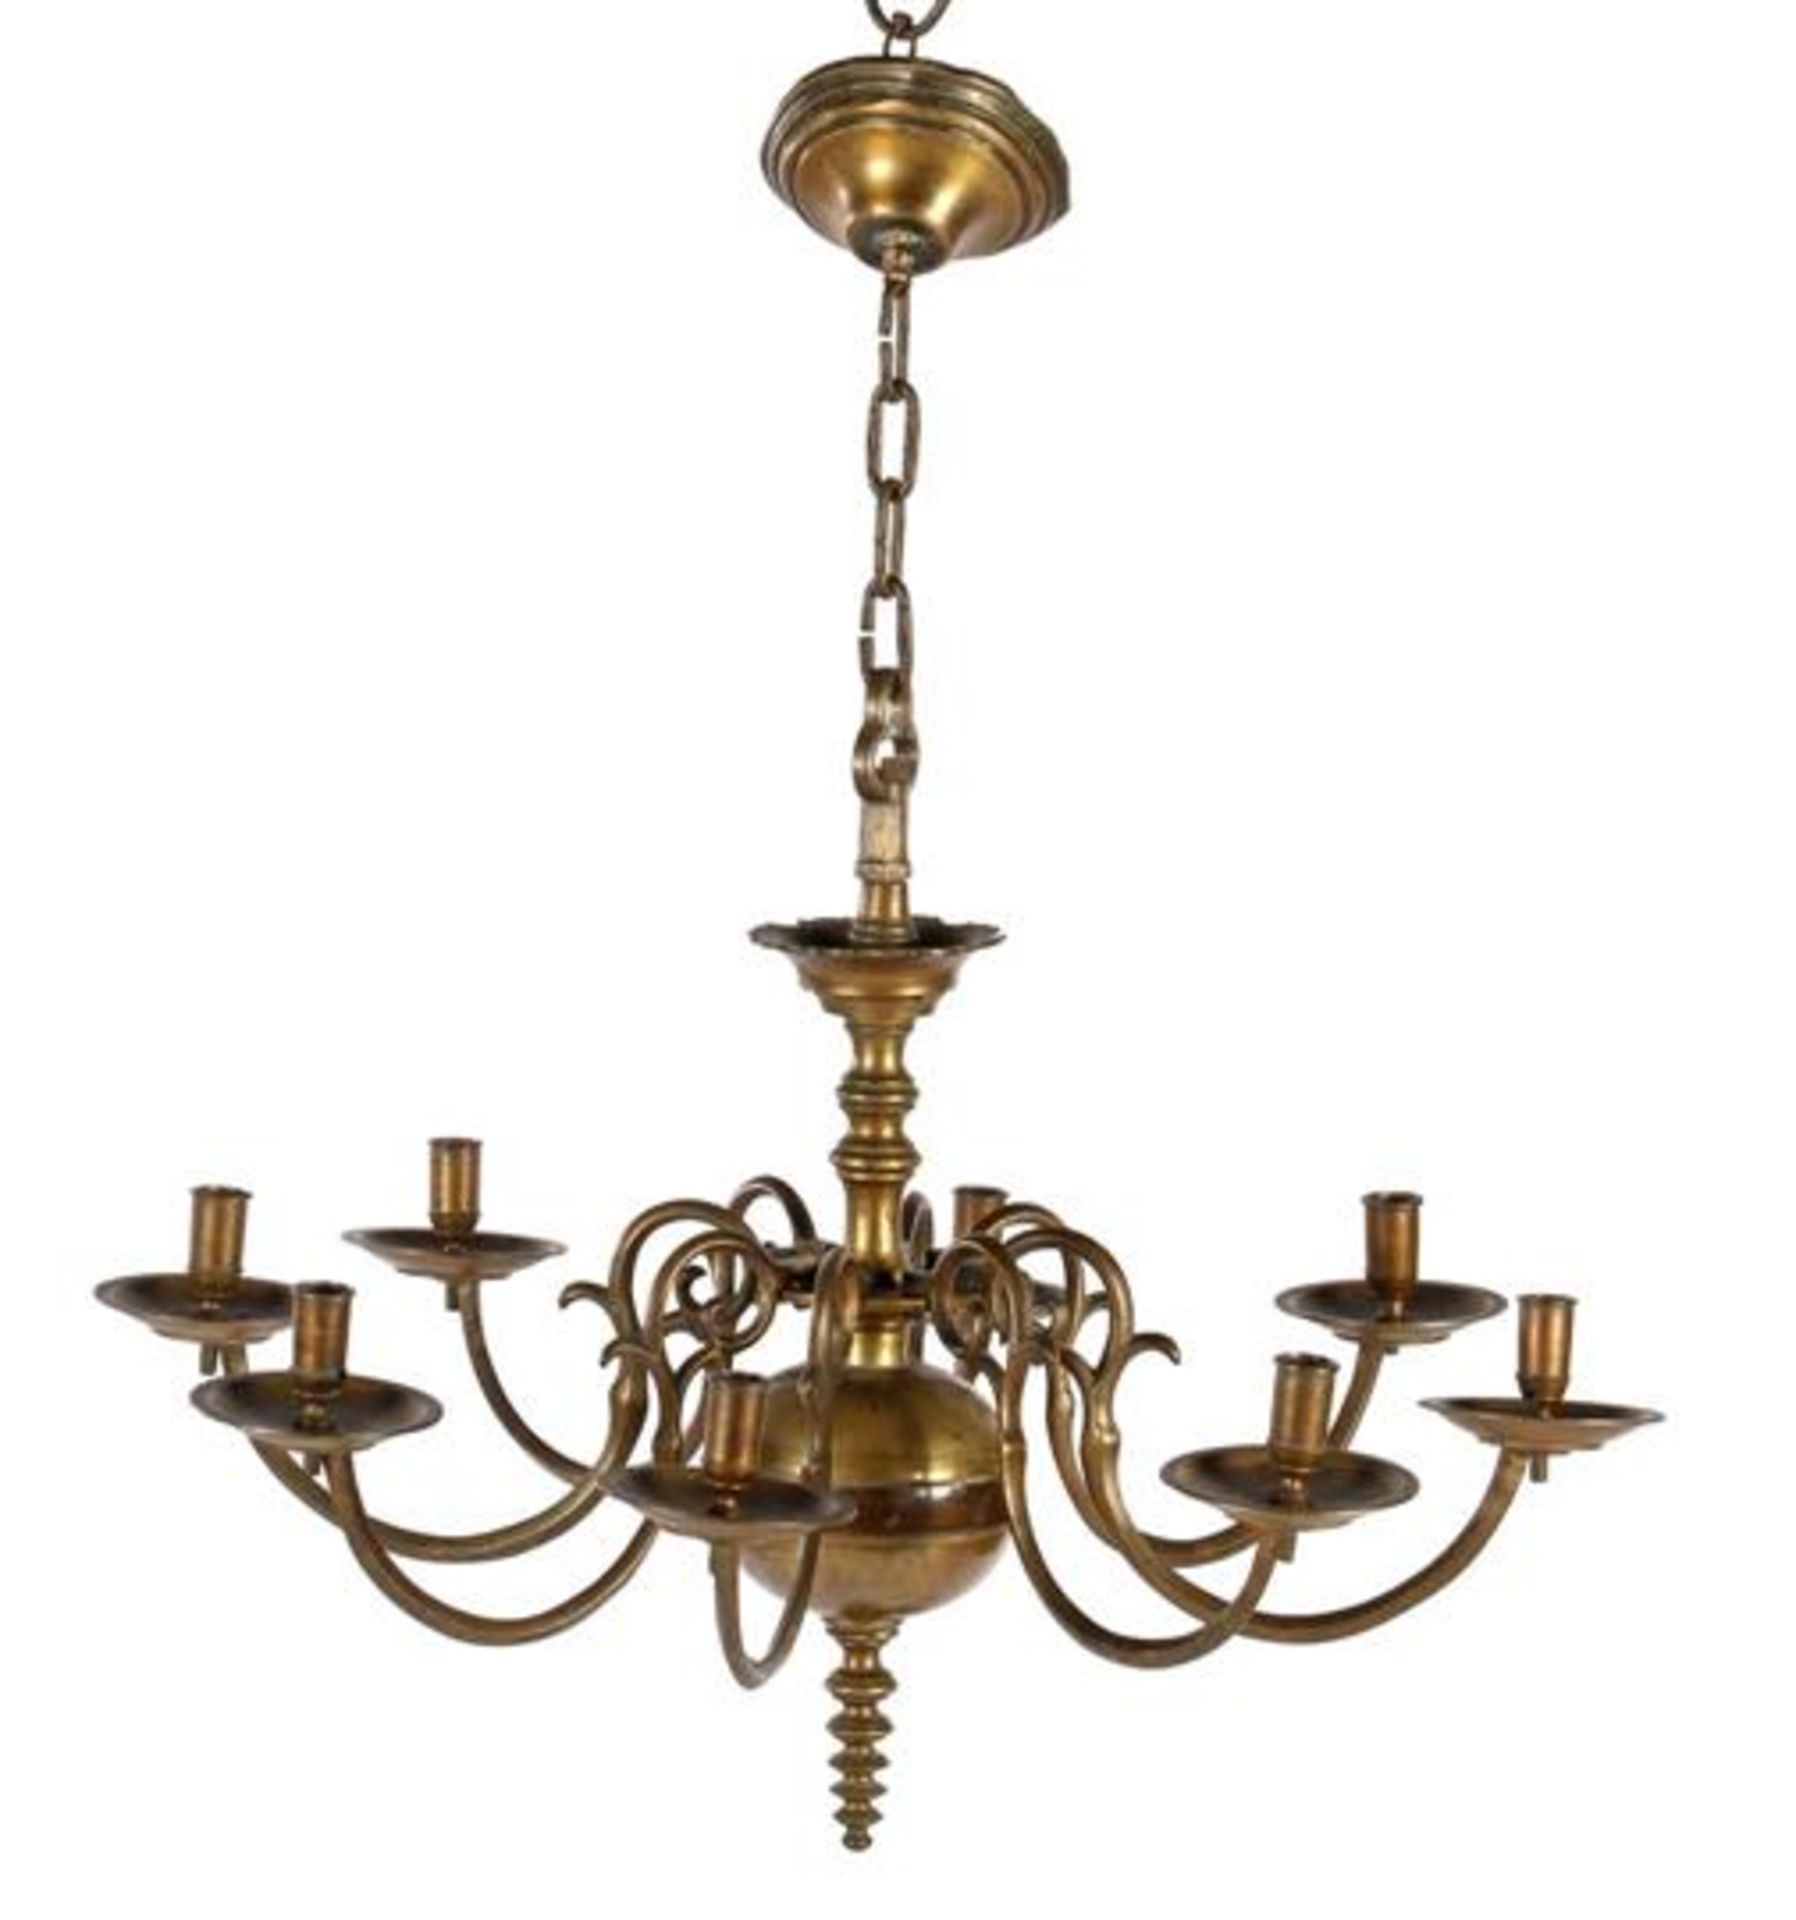 Bronze 18th century 6-armed candle chandelier 83 cm high, 71 cm diameter